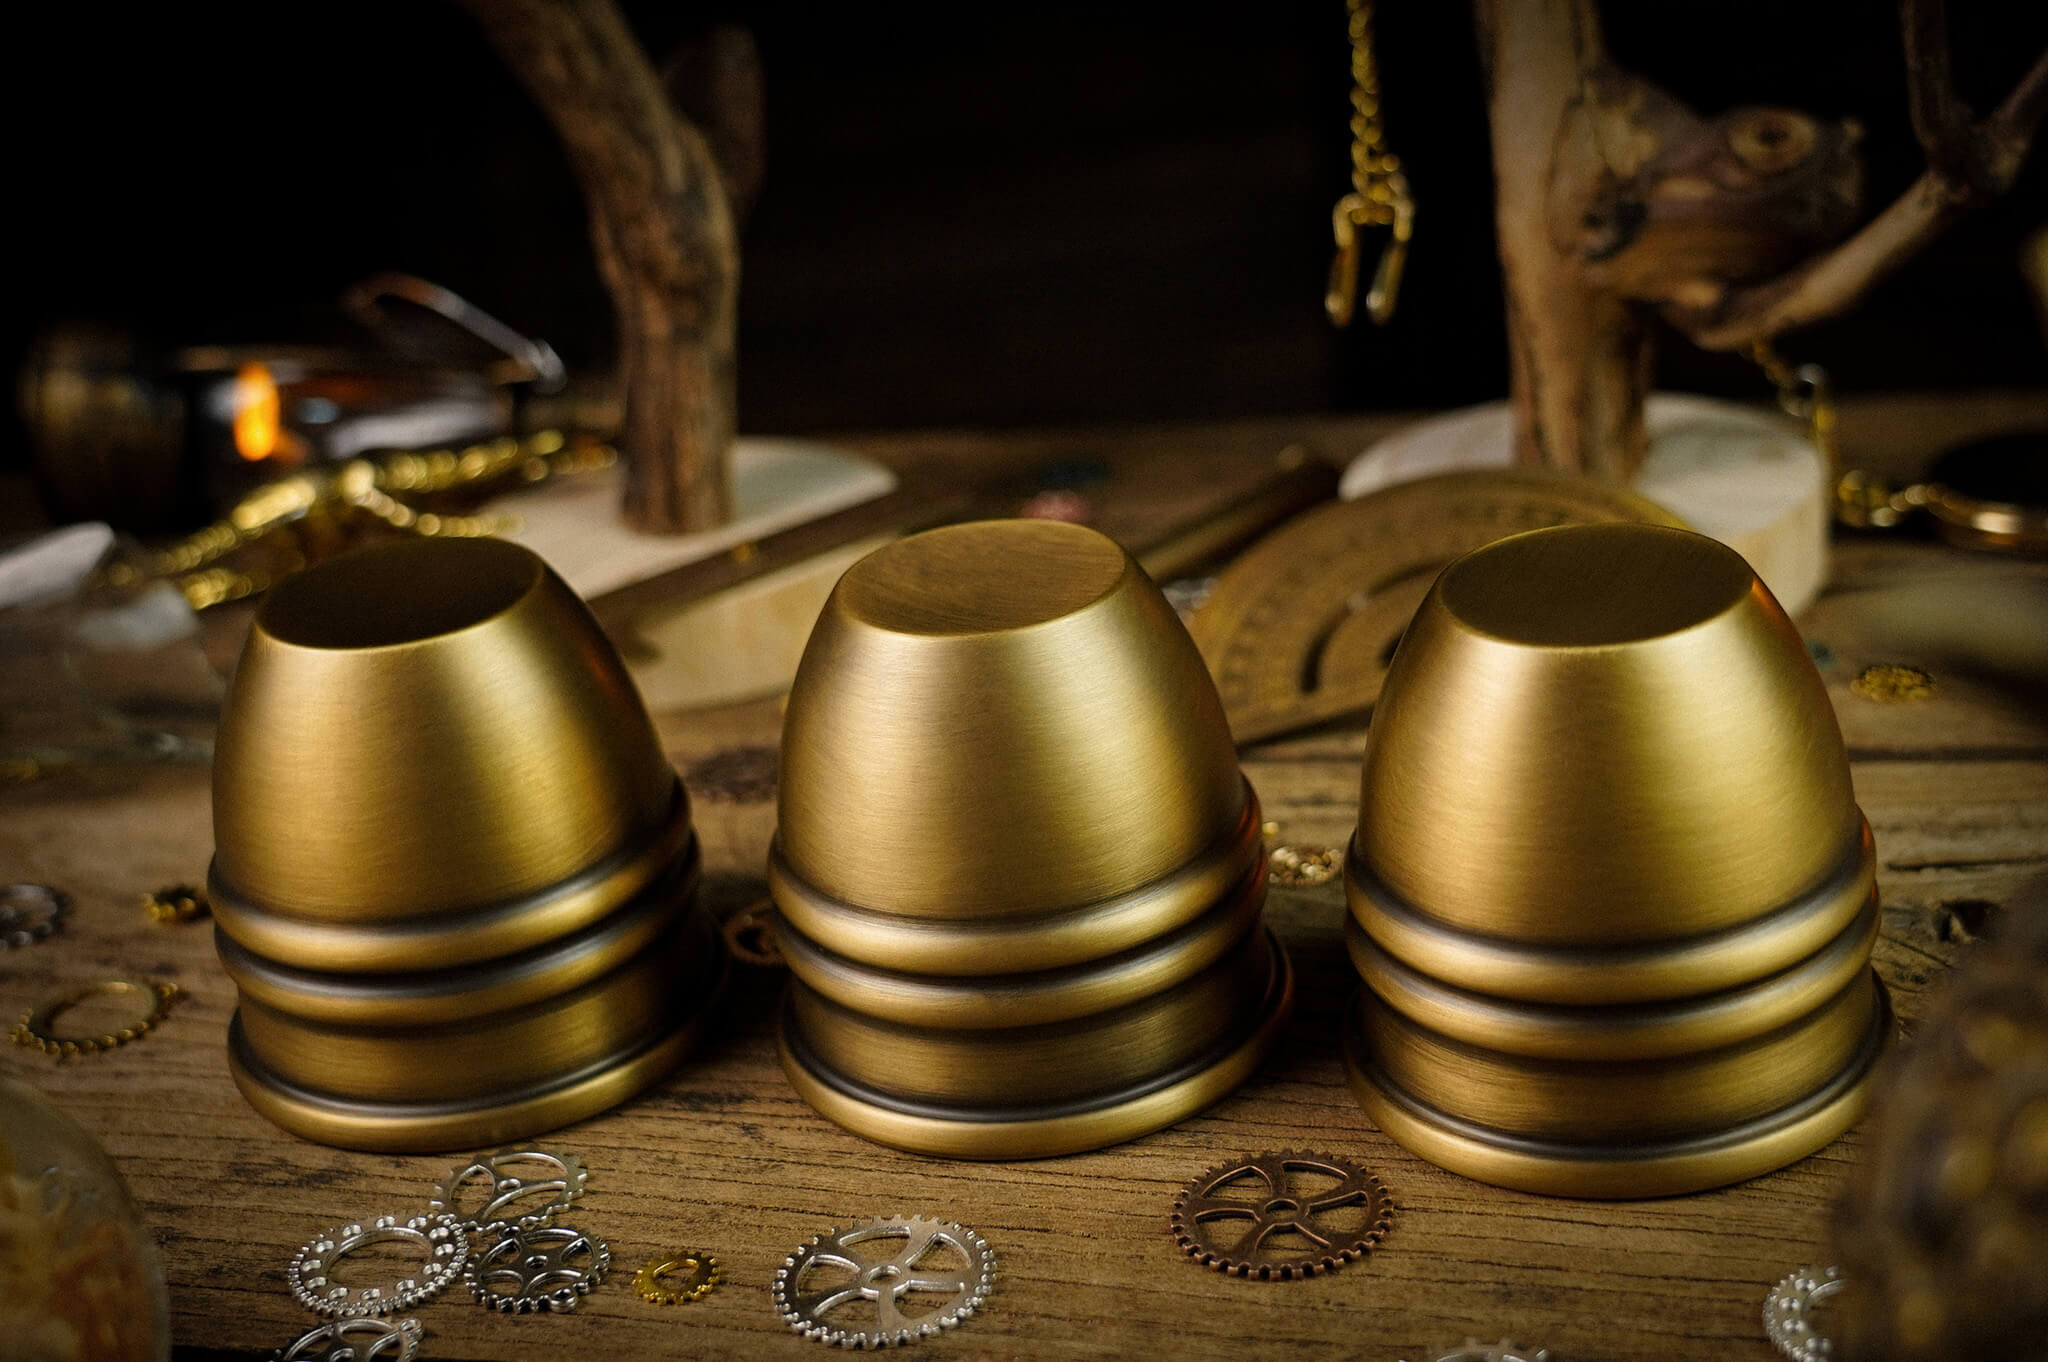 Golf Gift Set (Cups + Coasters) – Magic Pine